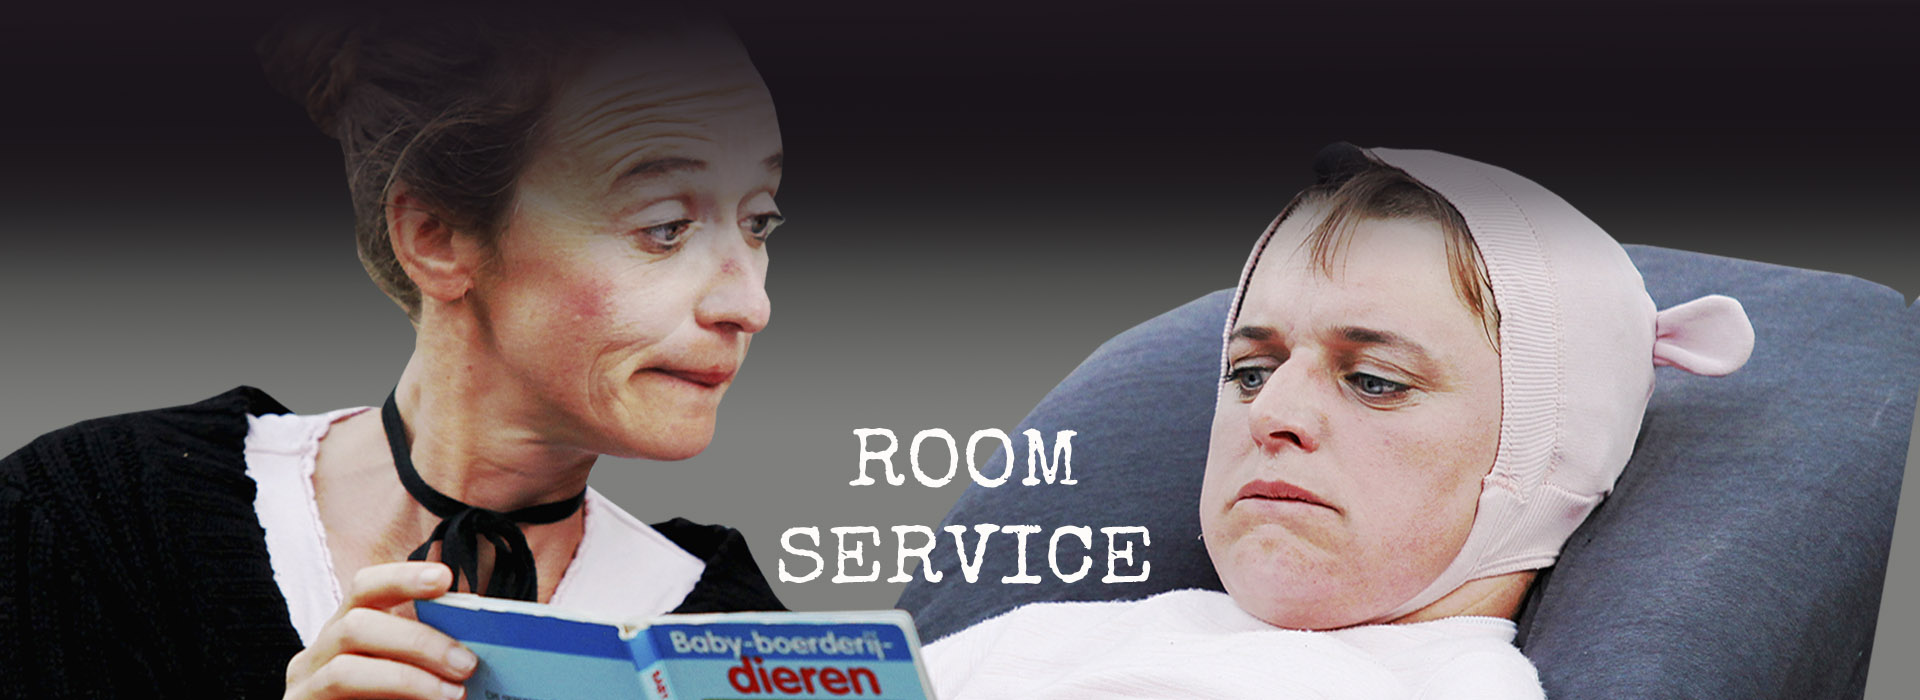 RoomService.jpg